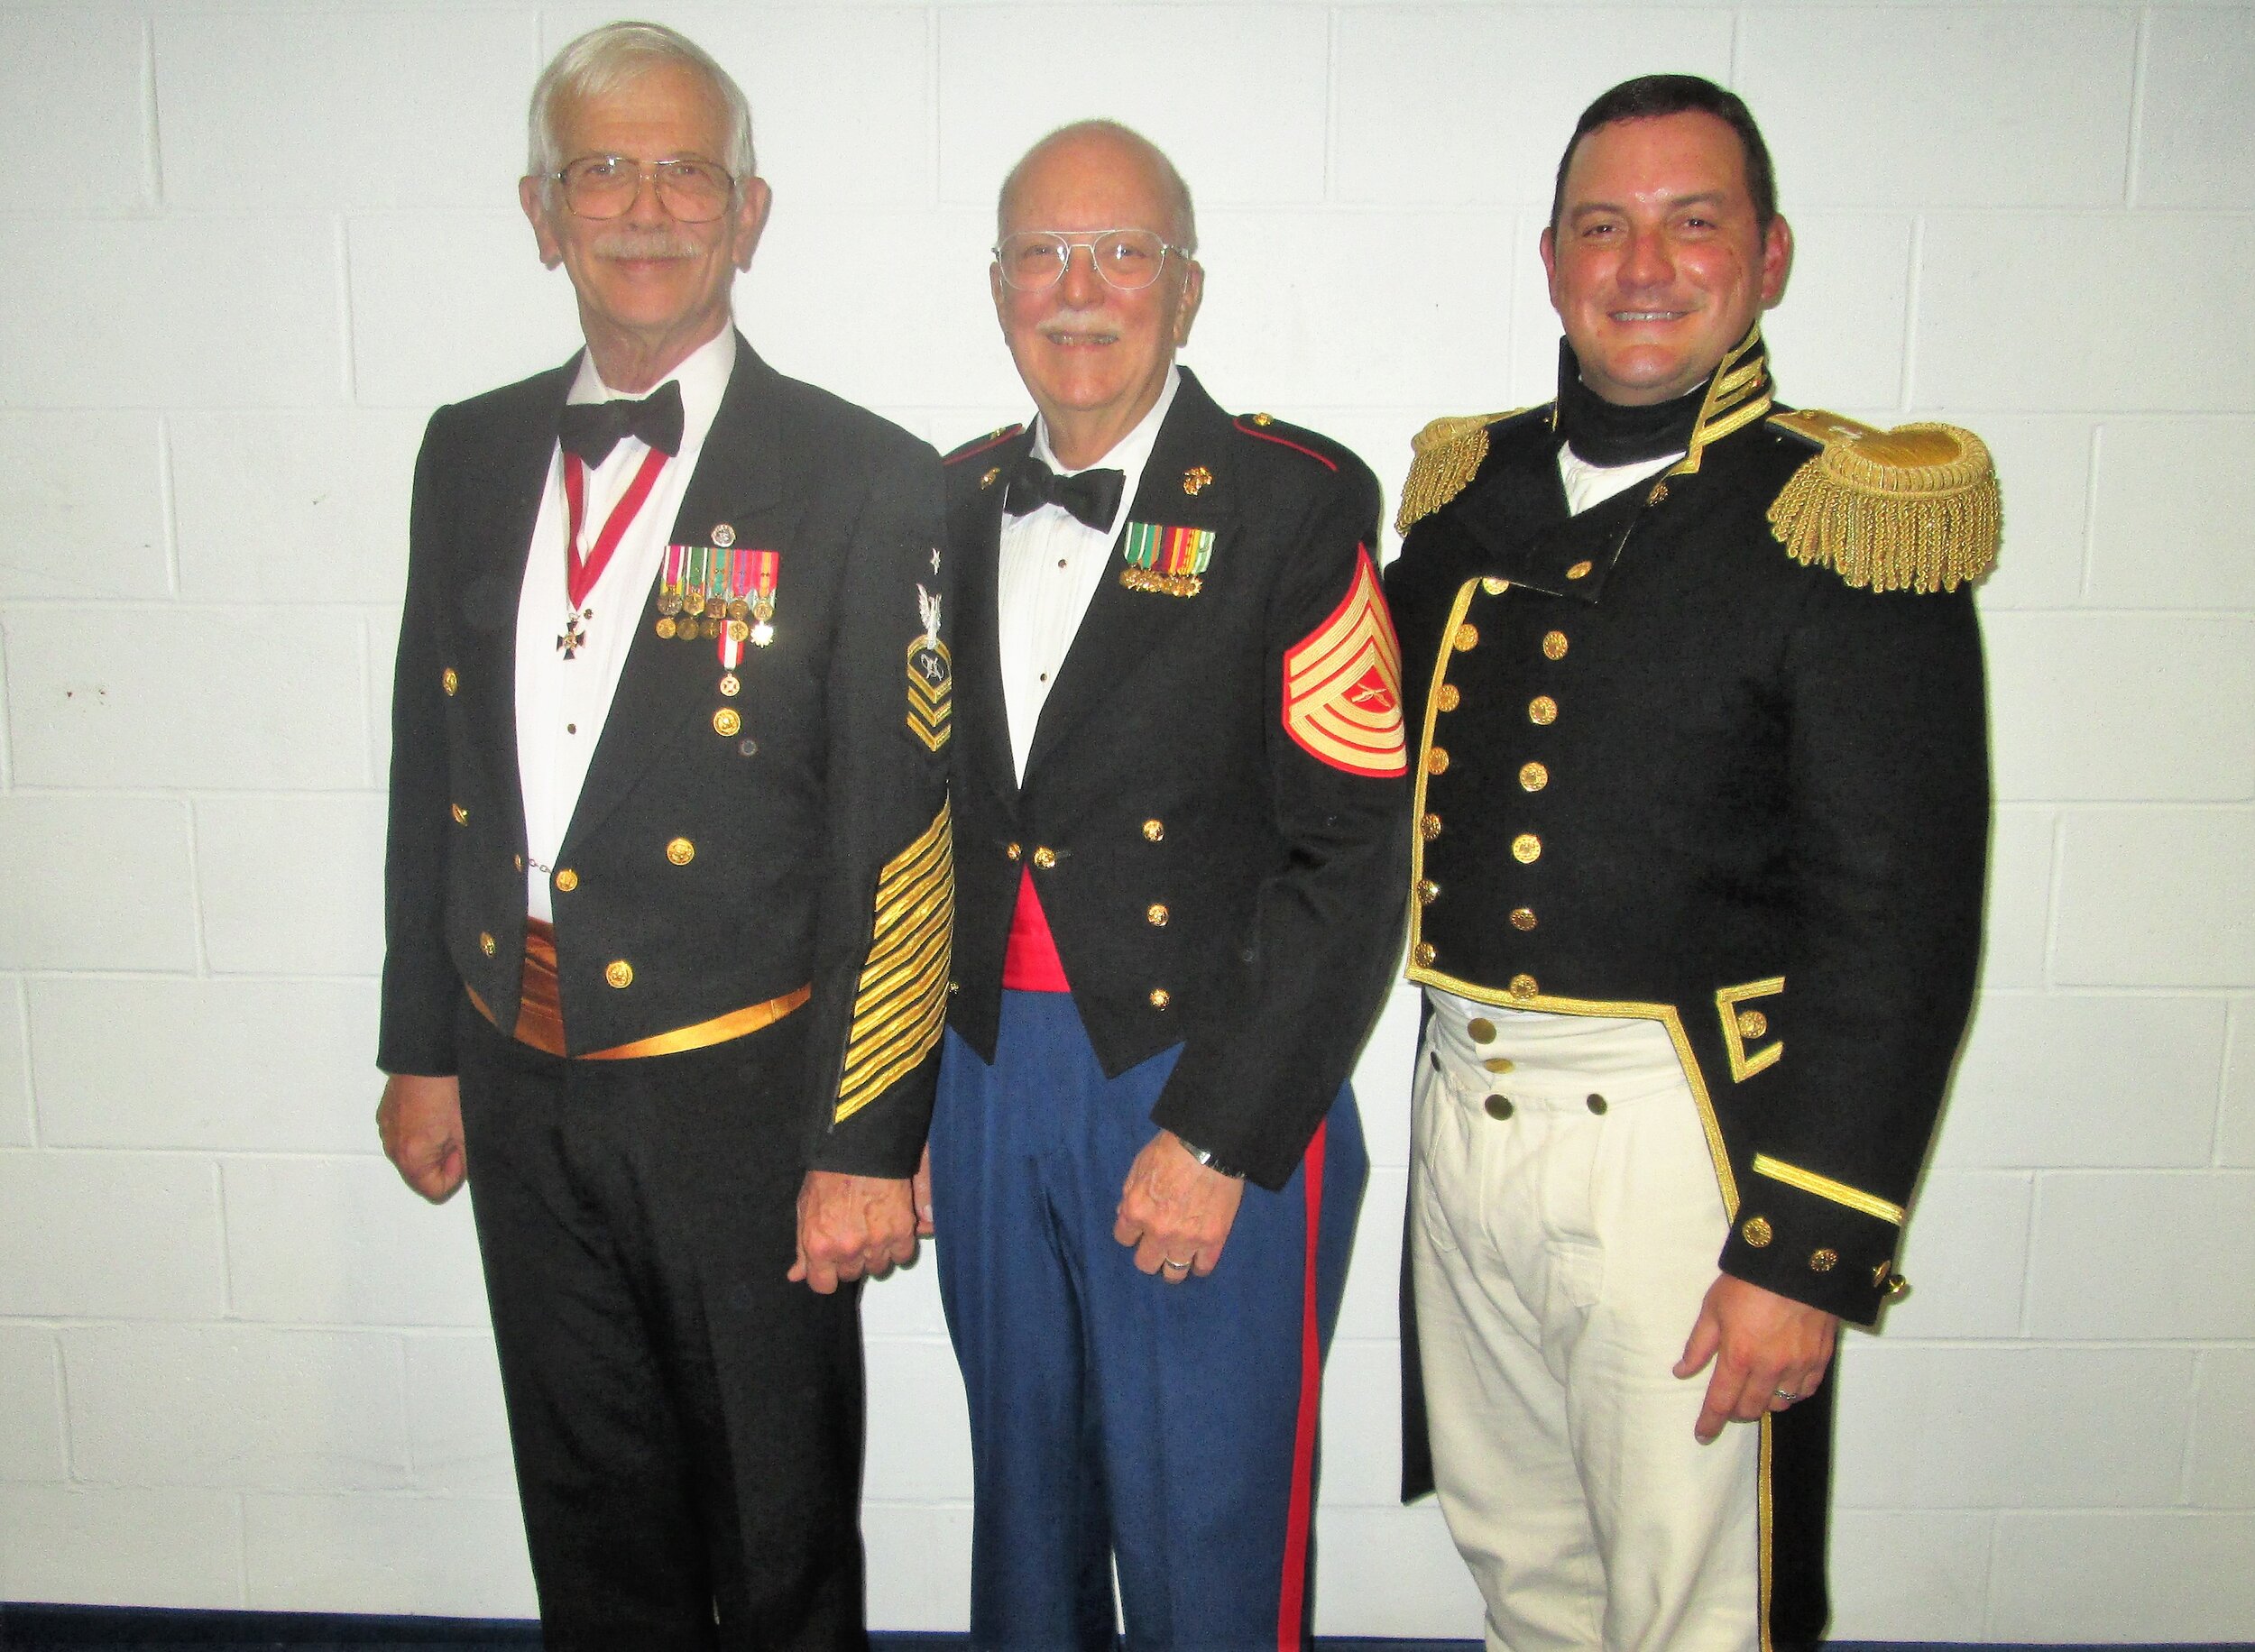  MCCS Bob Hansen, USN (Ret.), MSgt Tom Gafford, USMC (Ret.) and CDR Nathaniel R. Schick, USN, the Commanding Officer of the USS&nbsp; Constitution &nbsp;in 1804 uniform 